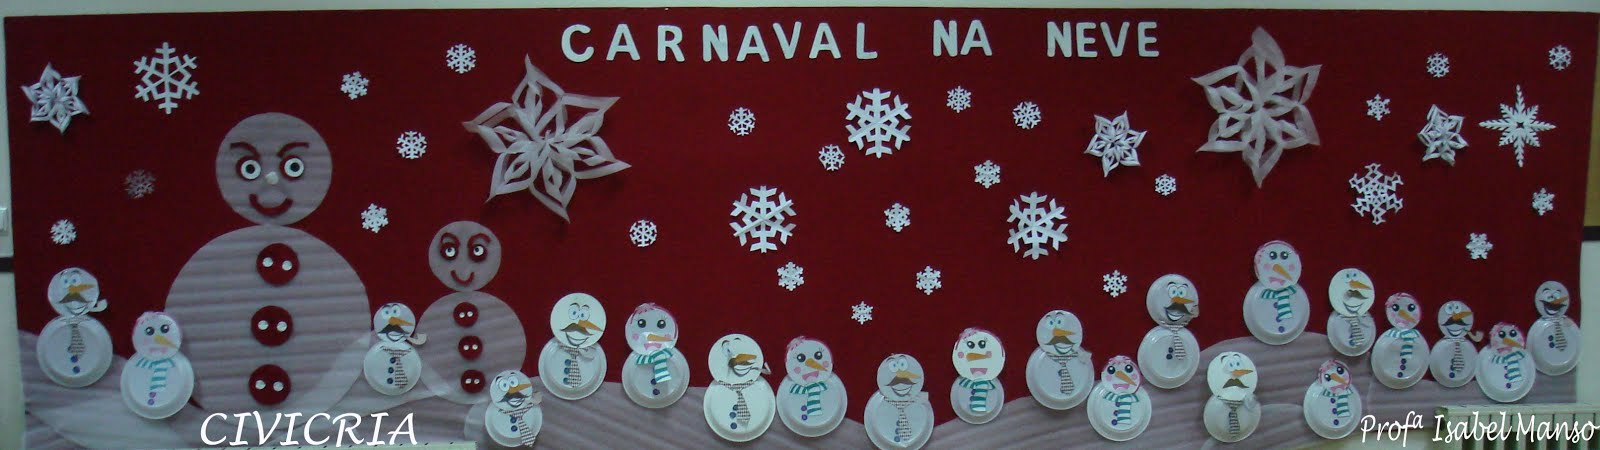 Carnaval Na Neve [1939]